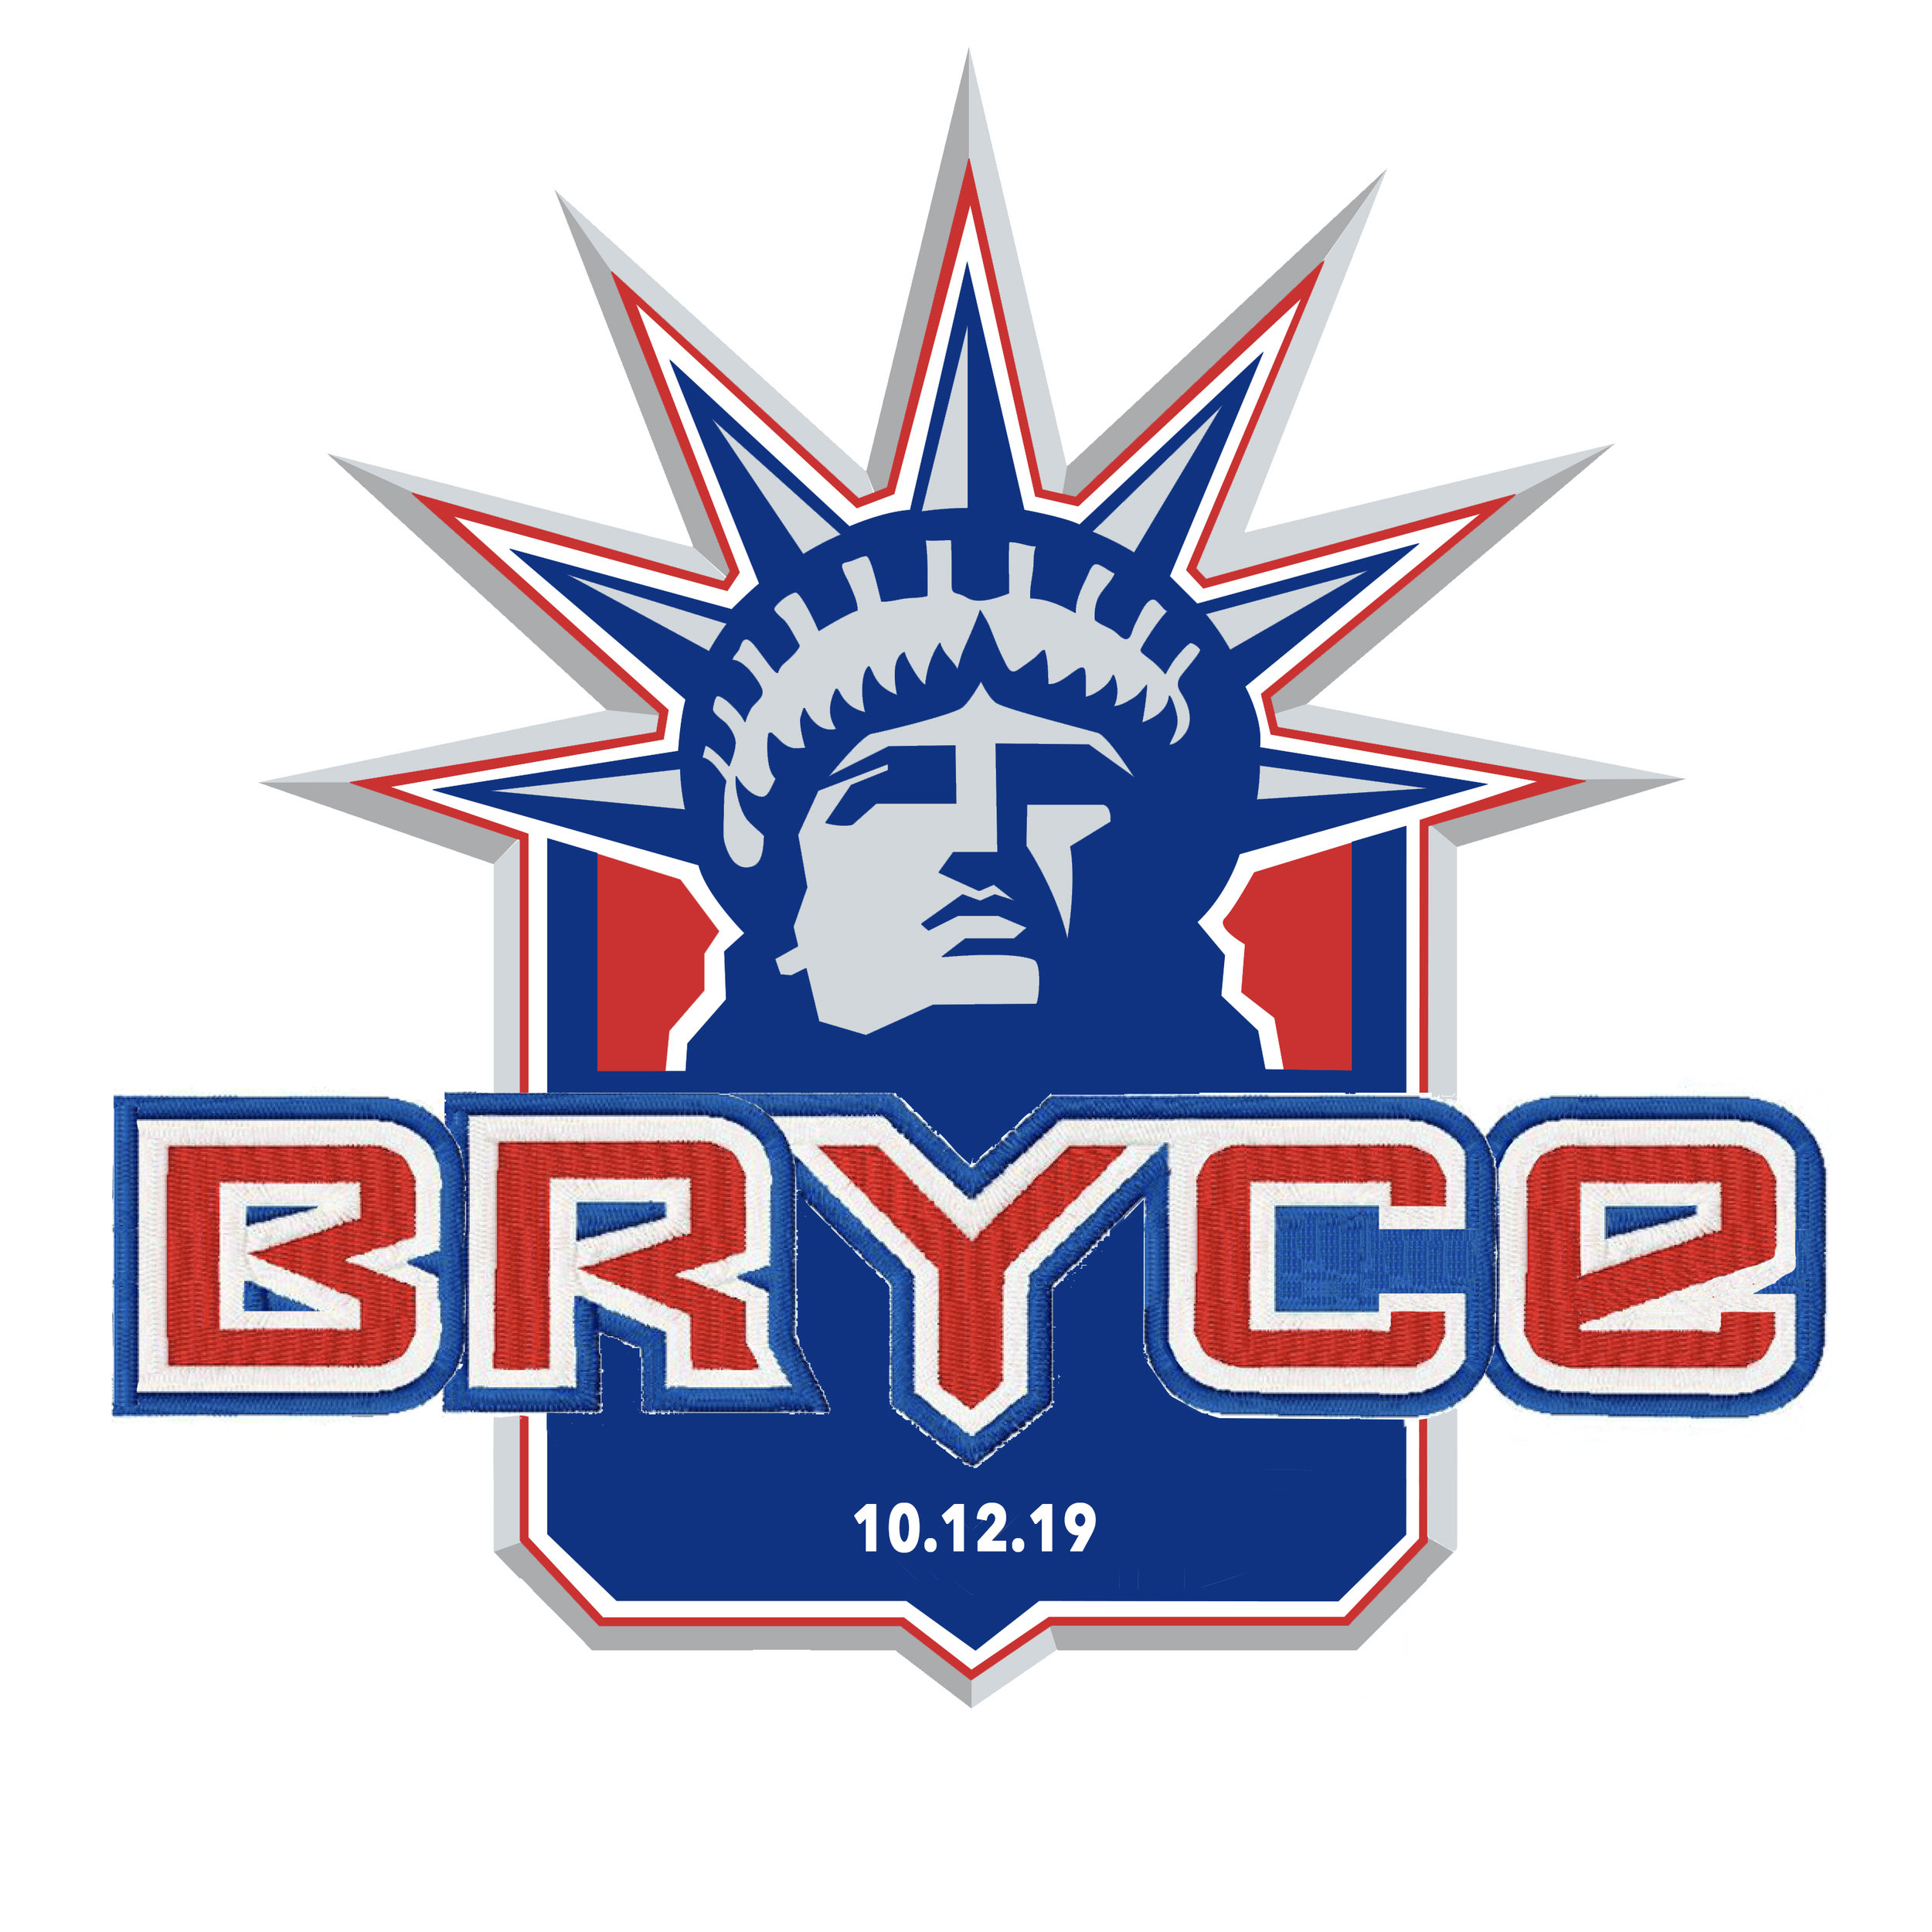 Bryce "Rangers" logo